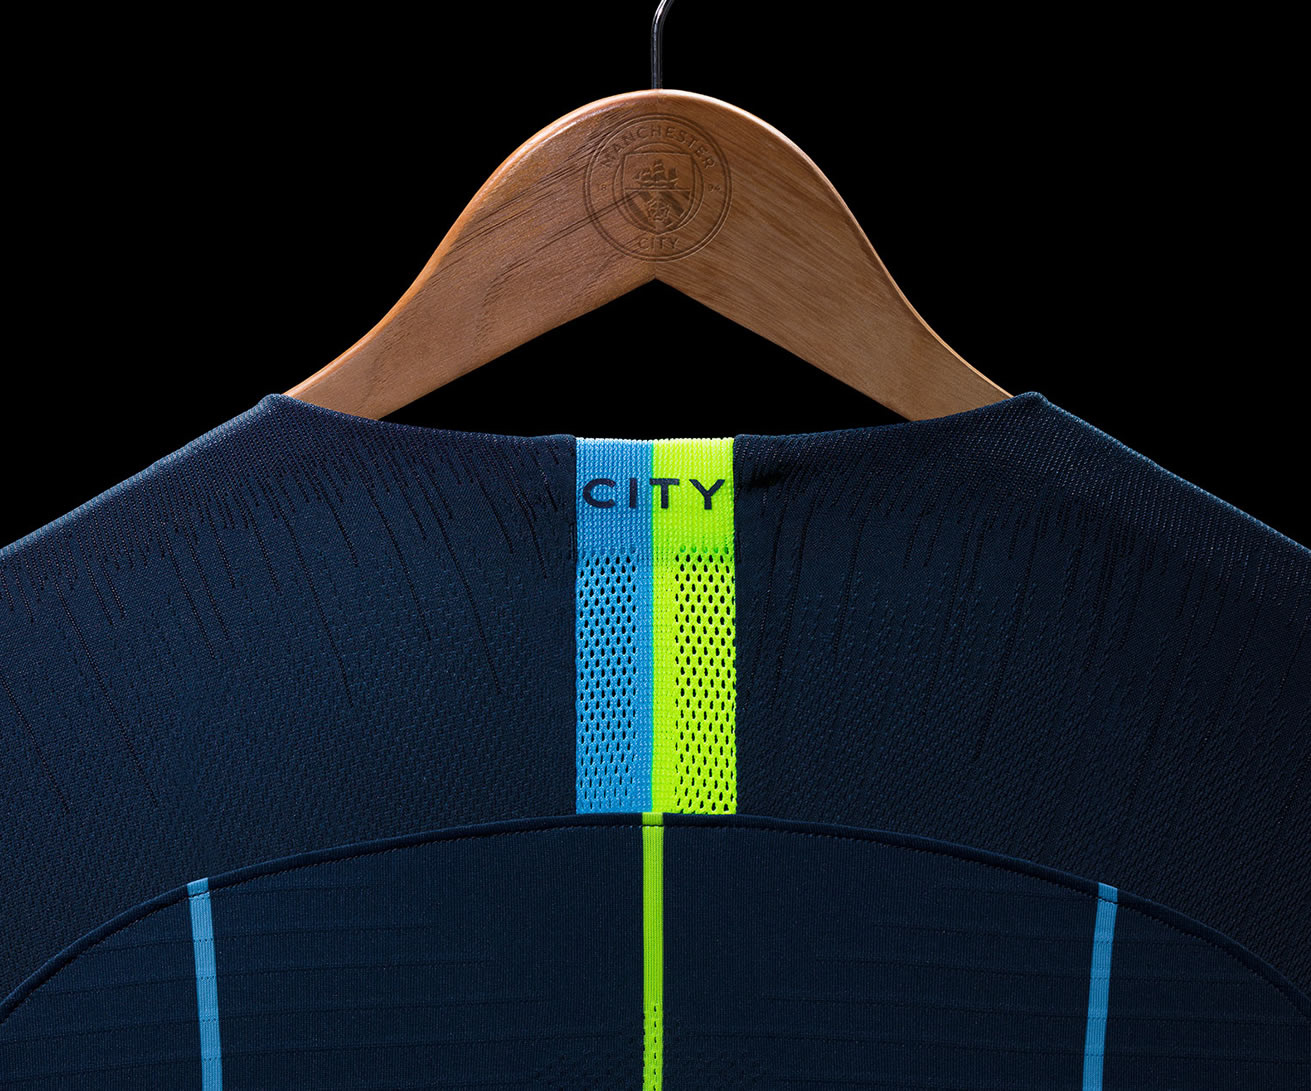 Camiseta suplente 2018/19 del Manchester City | Imagen Nike